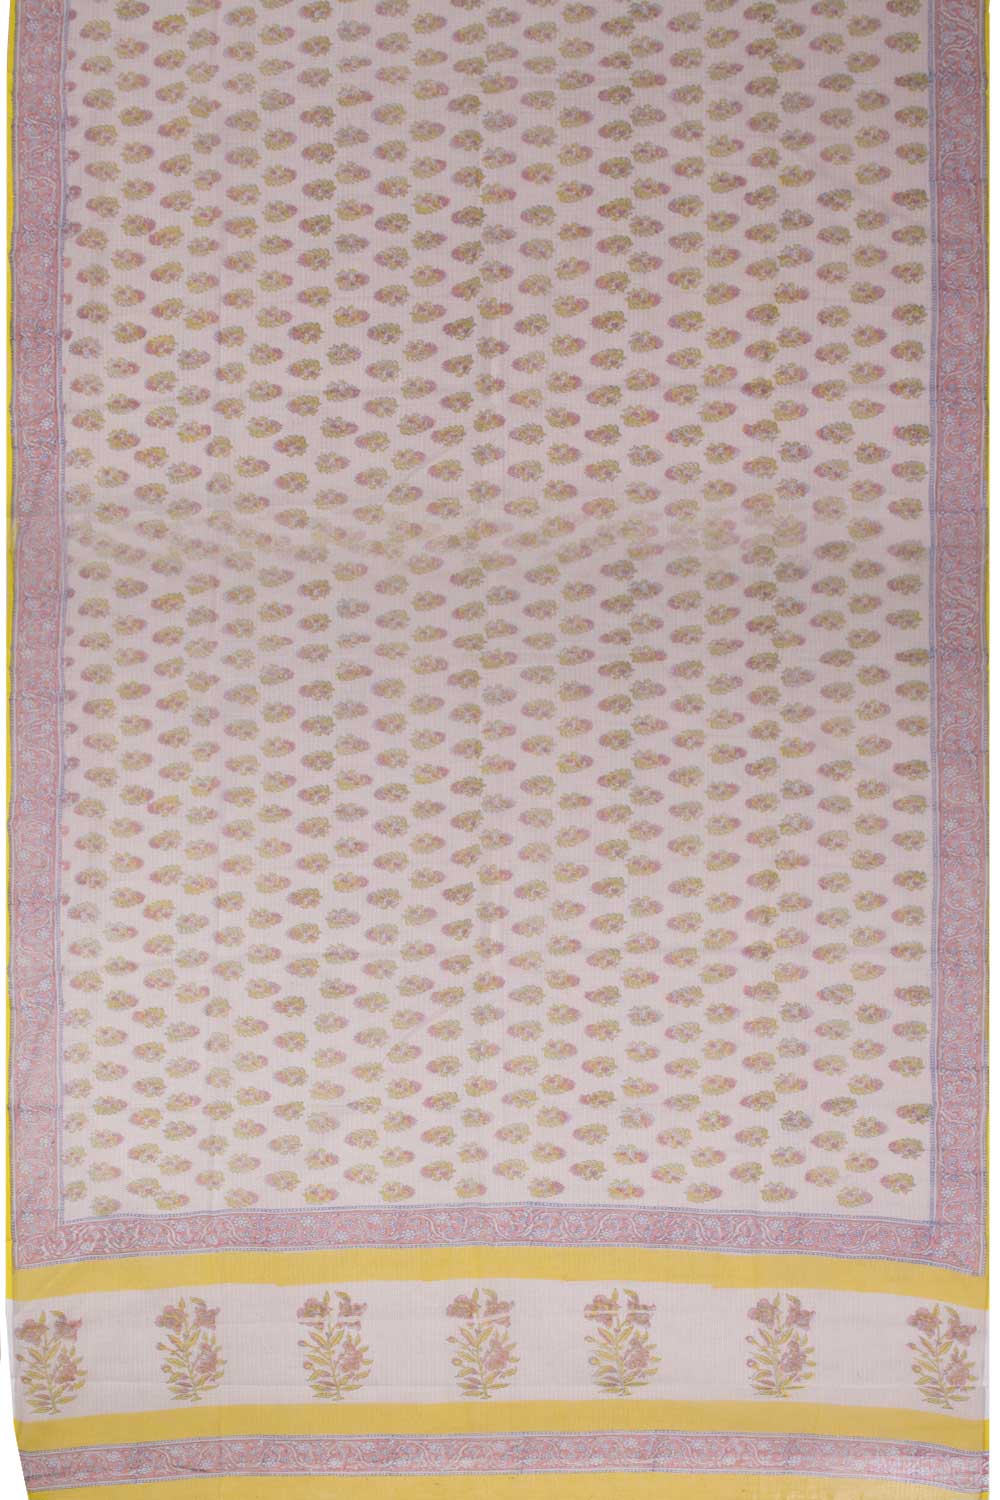 Yellow 3-Piece Mulmul Cotton Salwar Suit Material With Kota Dupatta 10070100 - Avishya